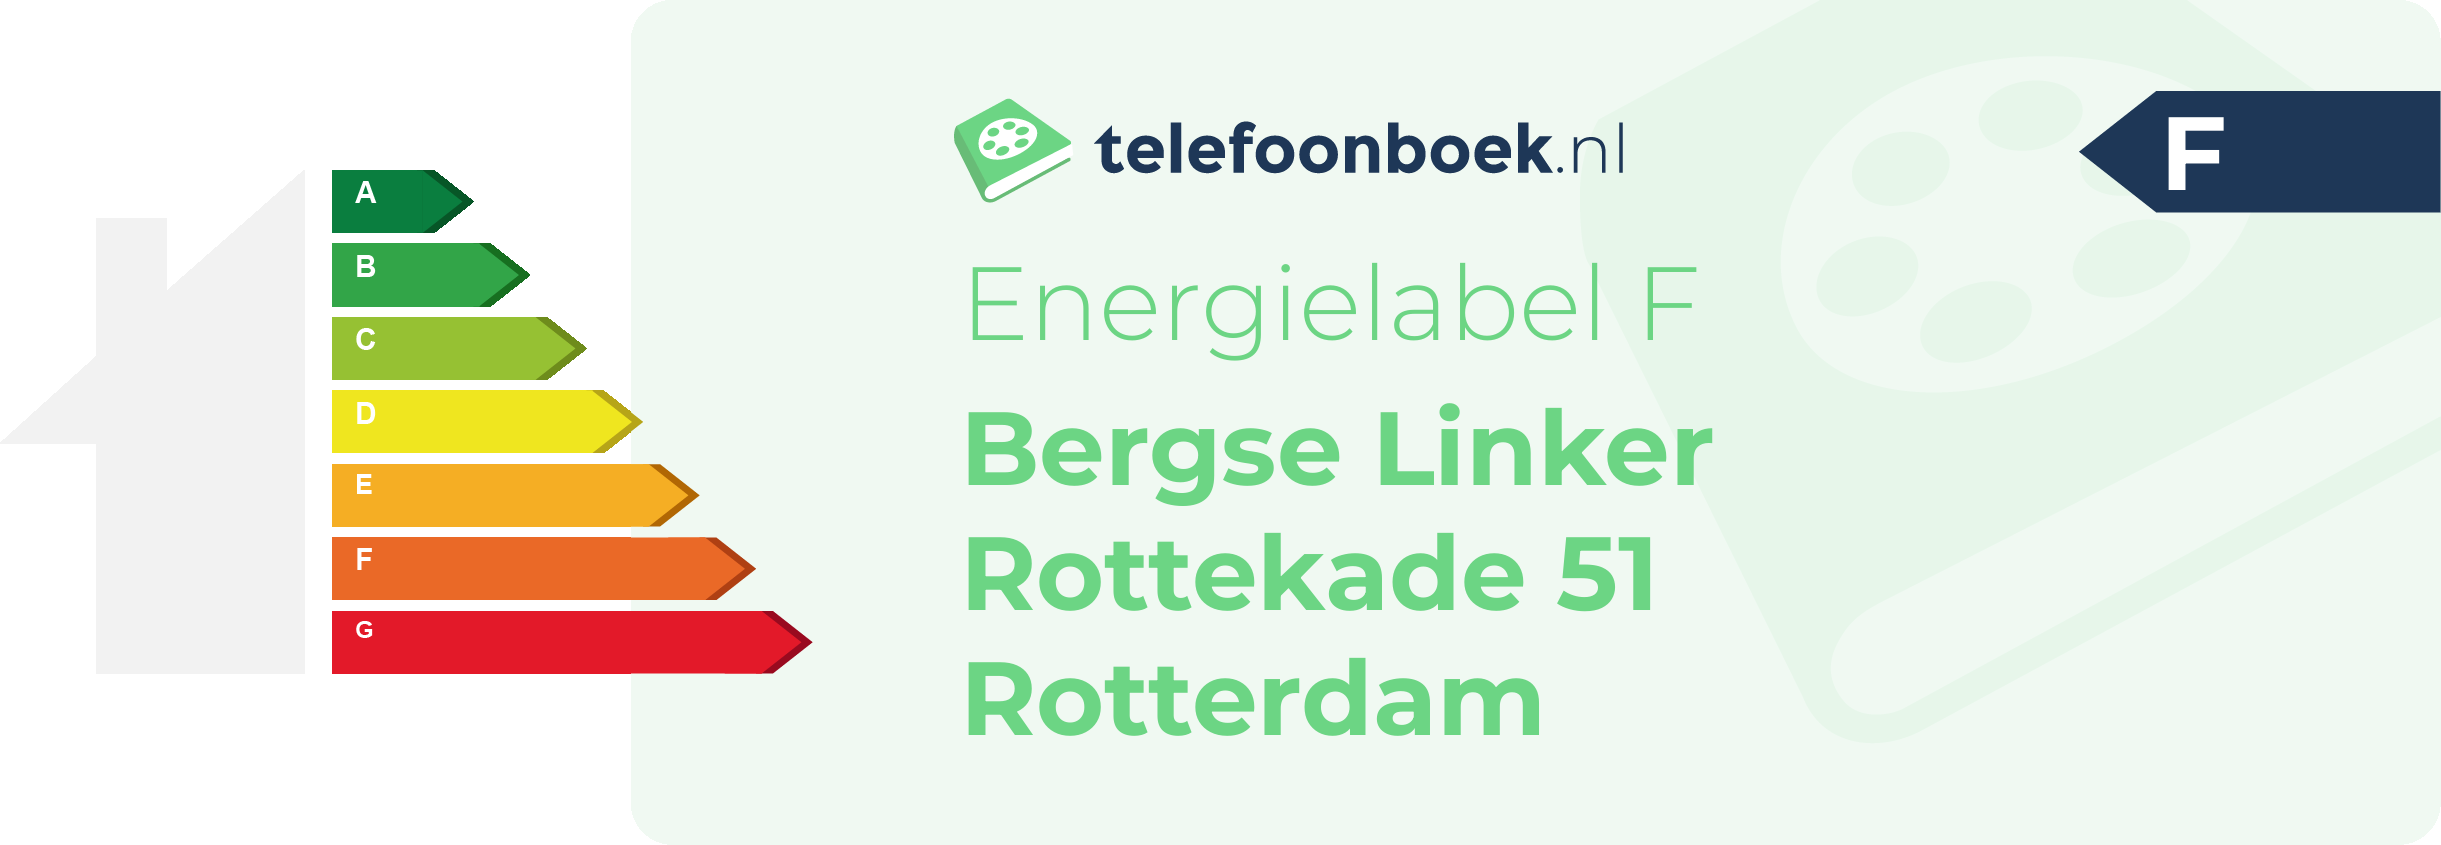 Energielabel Bergse Linker Rottekade 51 Rotterdam